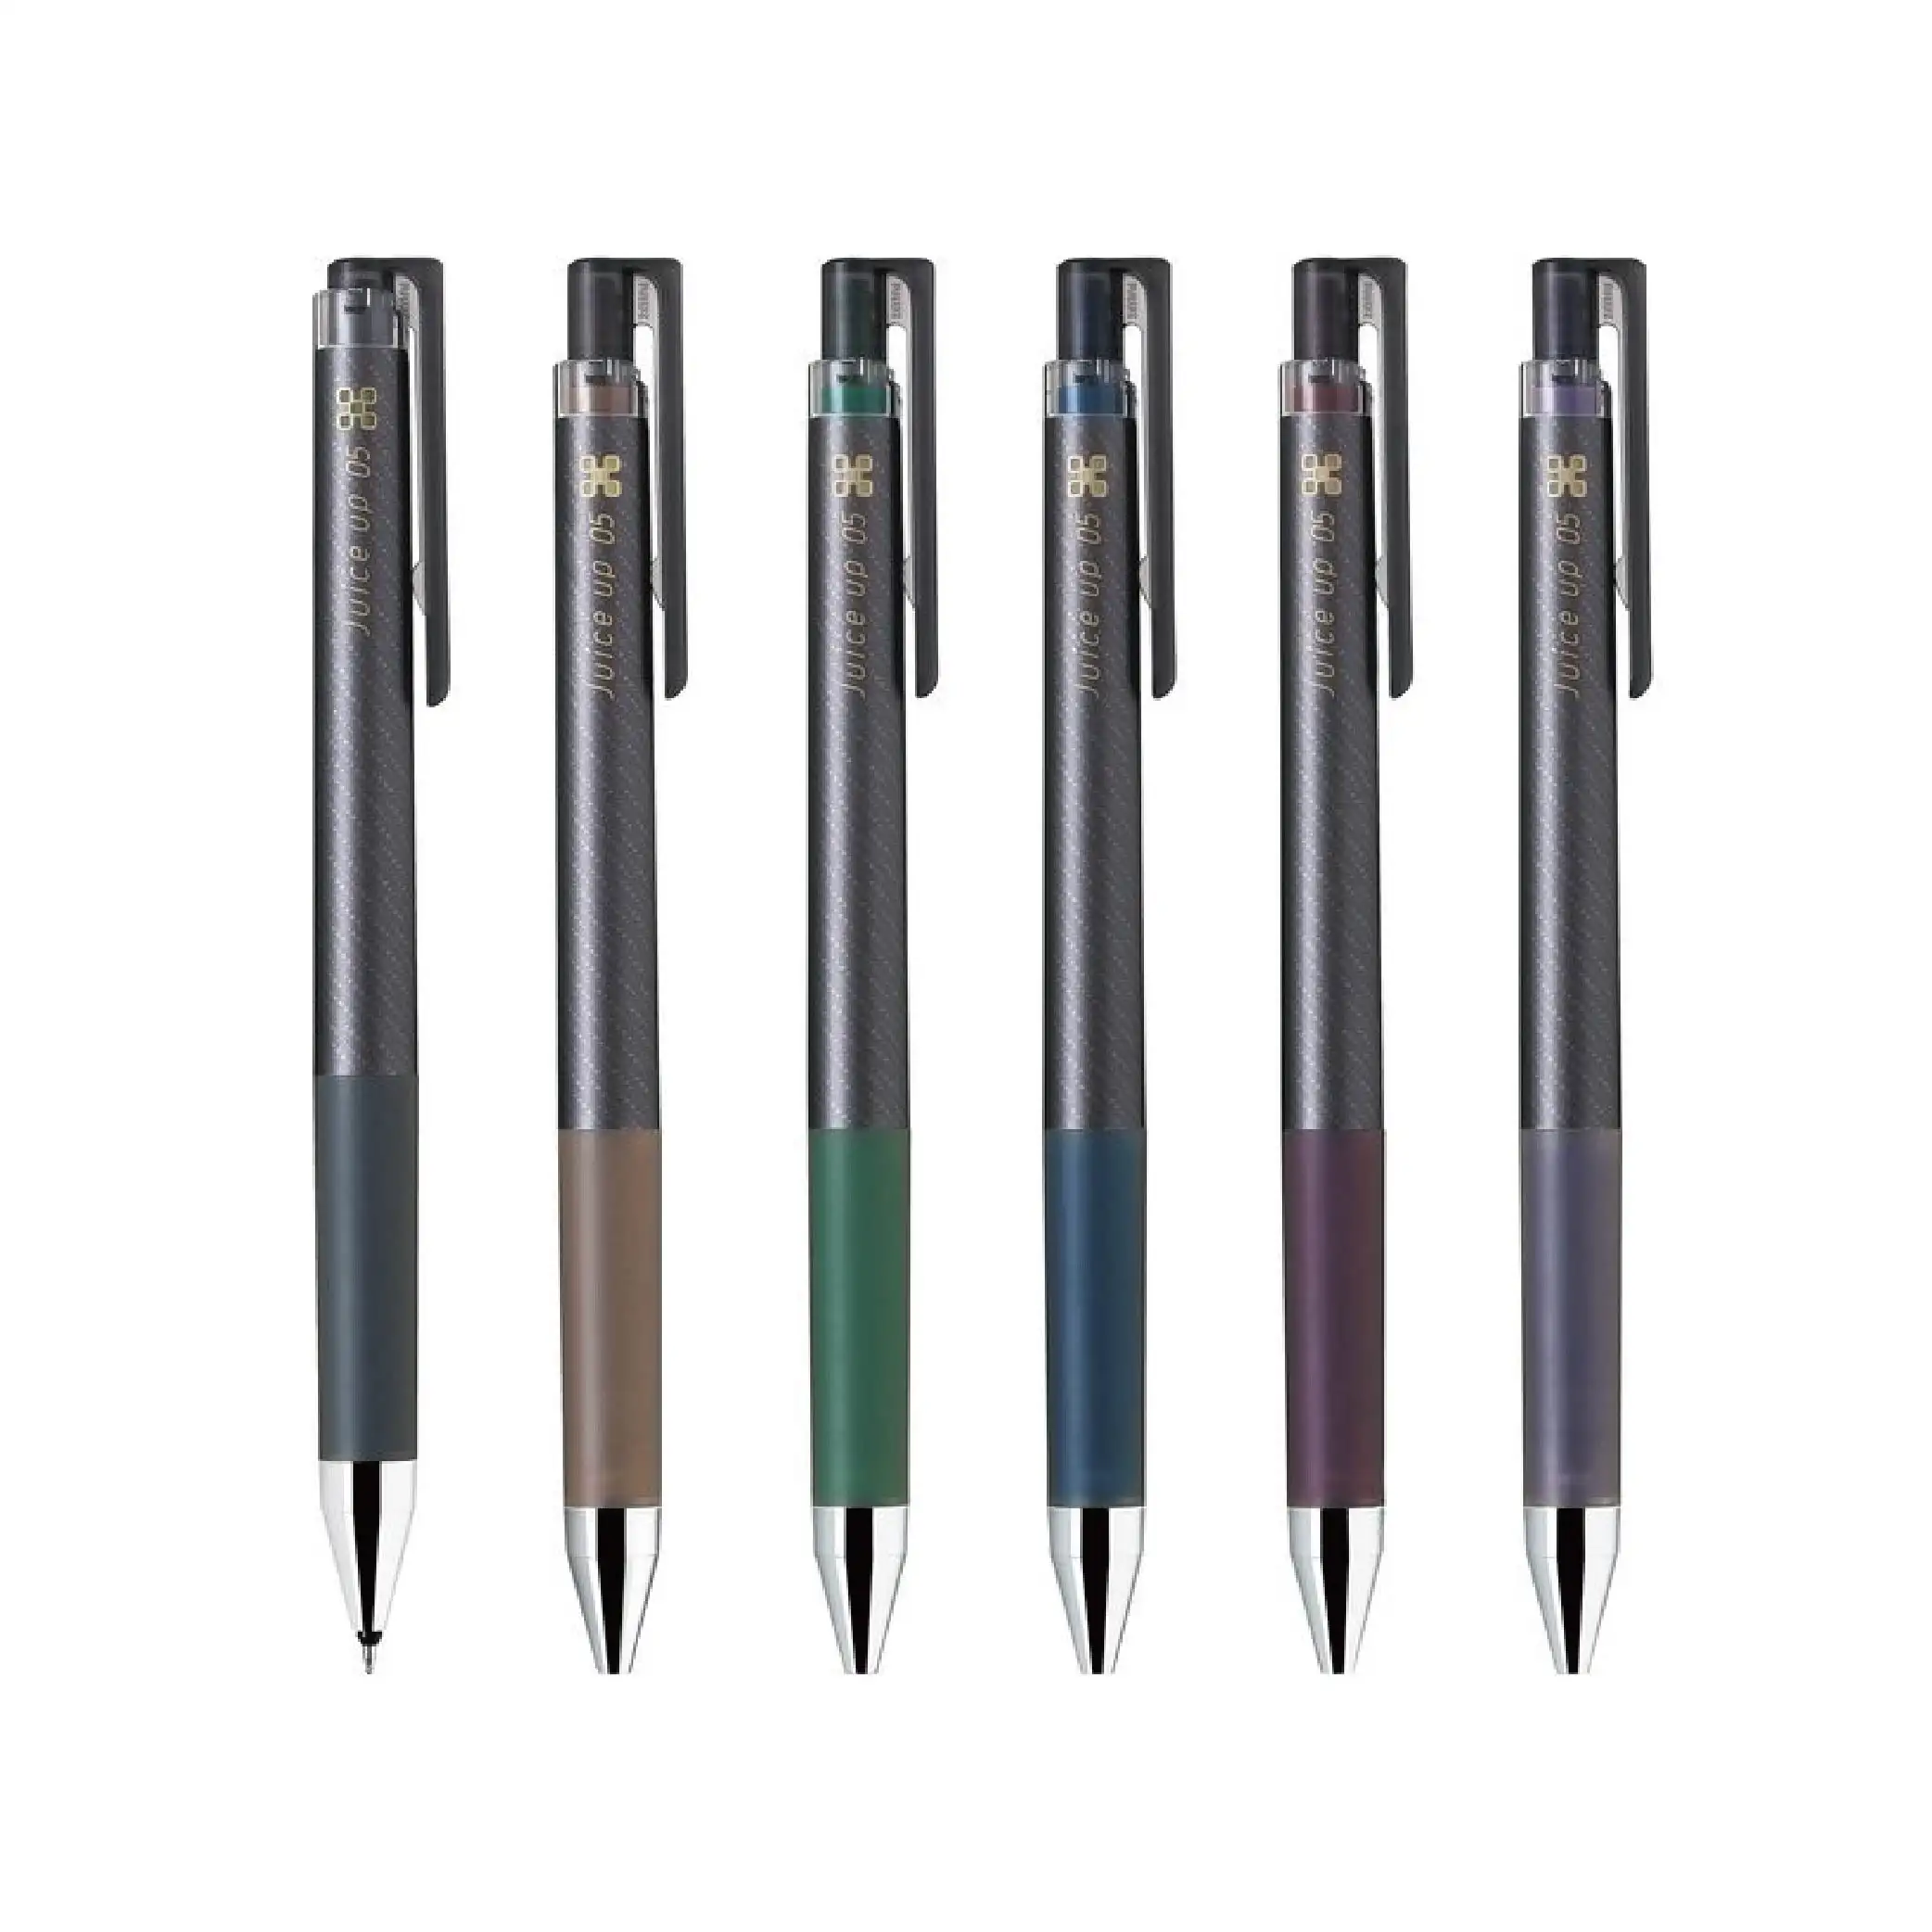 LJP-20S5-CG 0.5mm juice up classic glossy super juice pen inchiostro lucido retro pen super juice pen